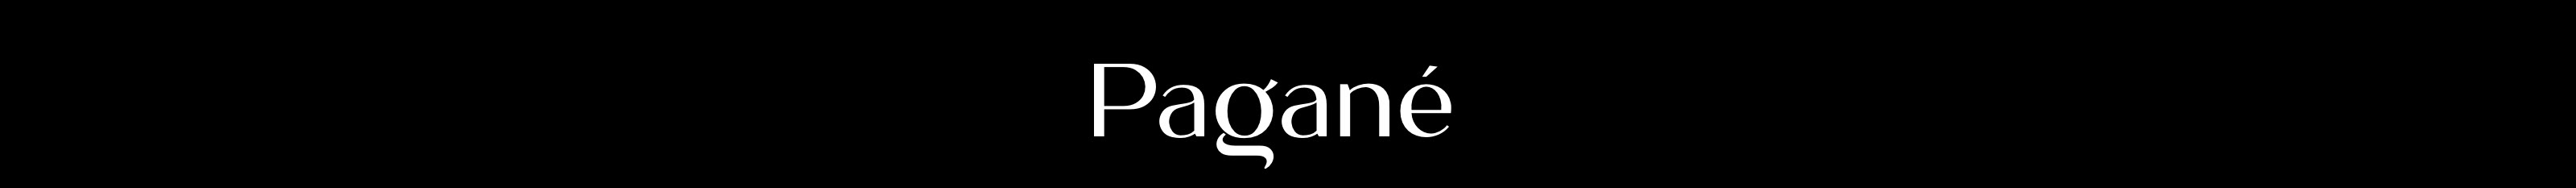 Pagane Studio's profile banner